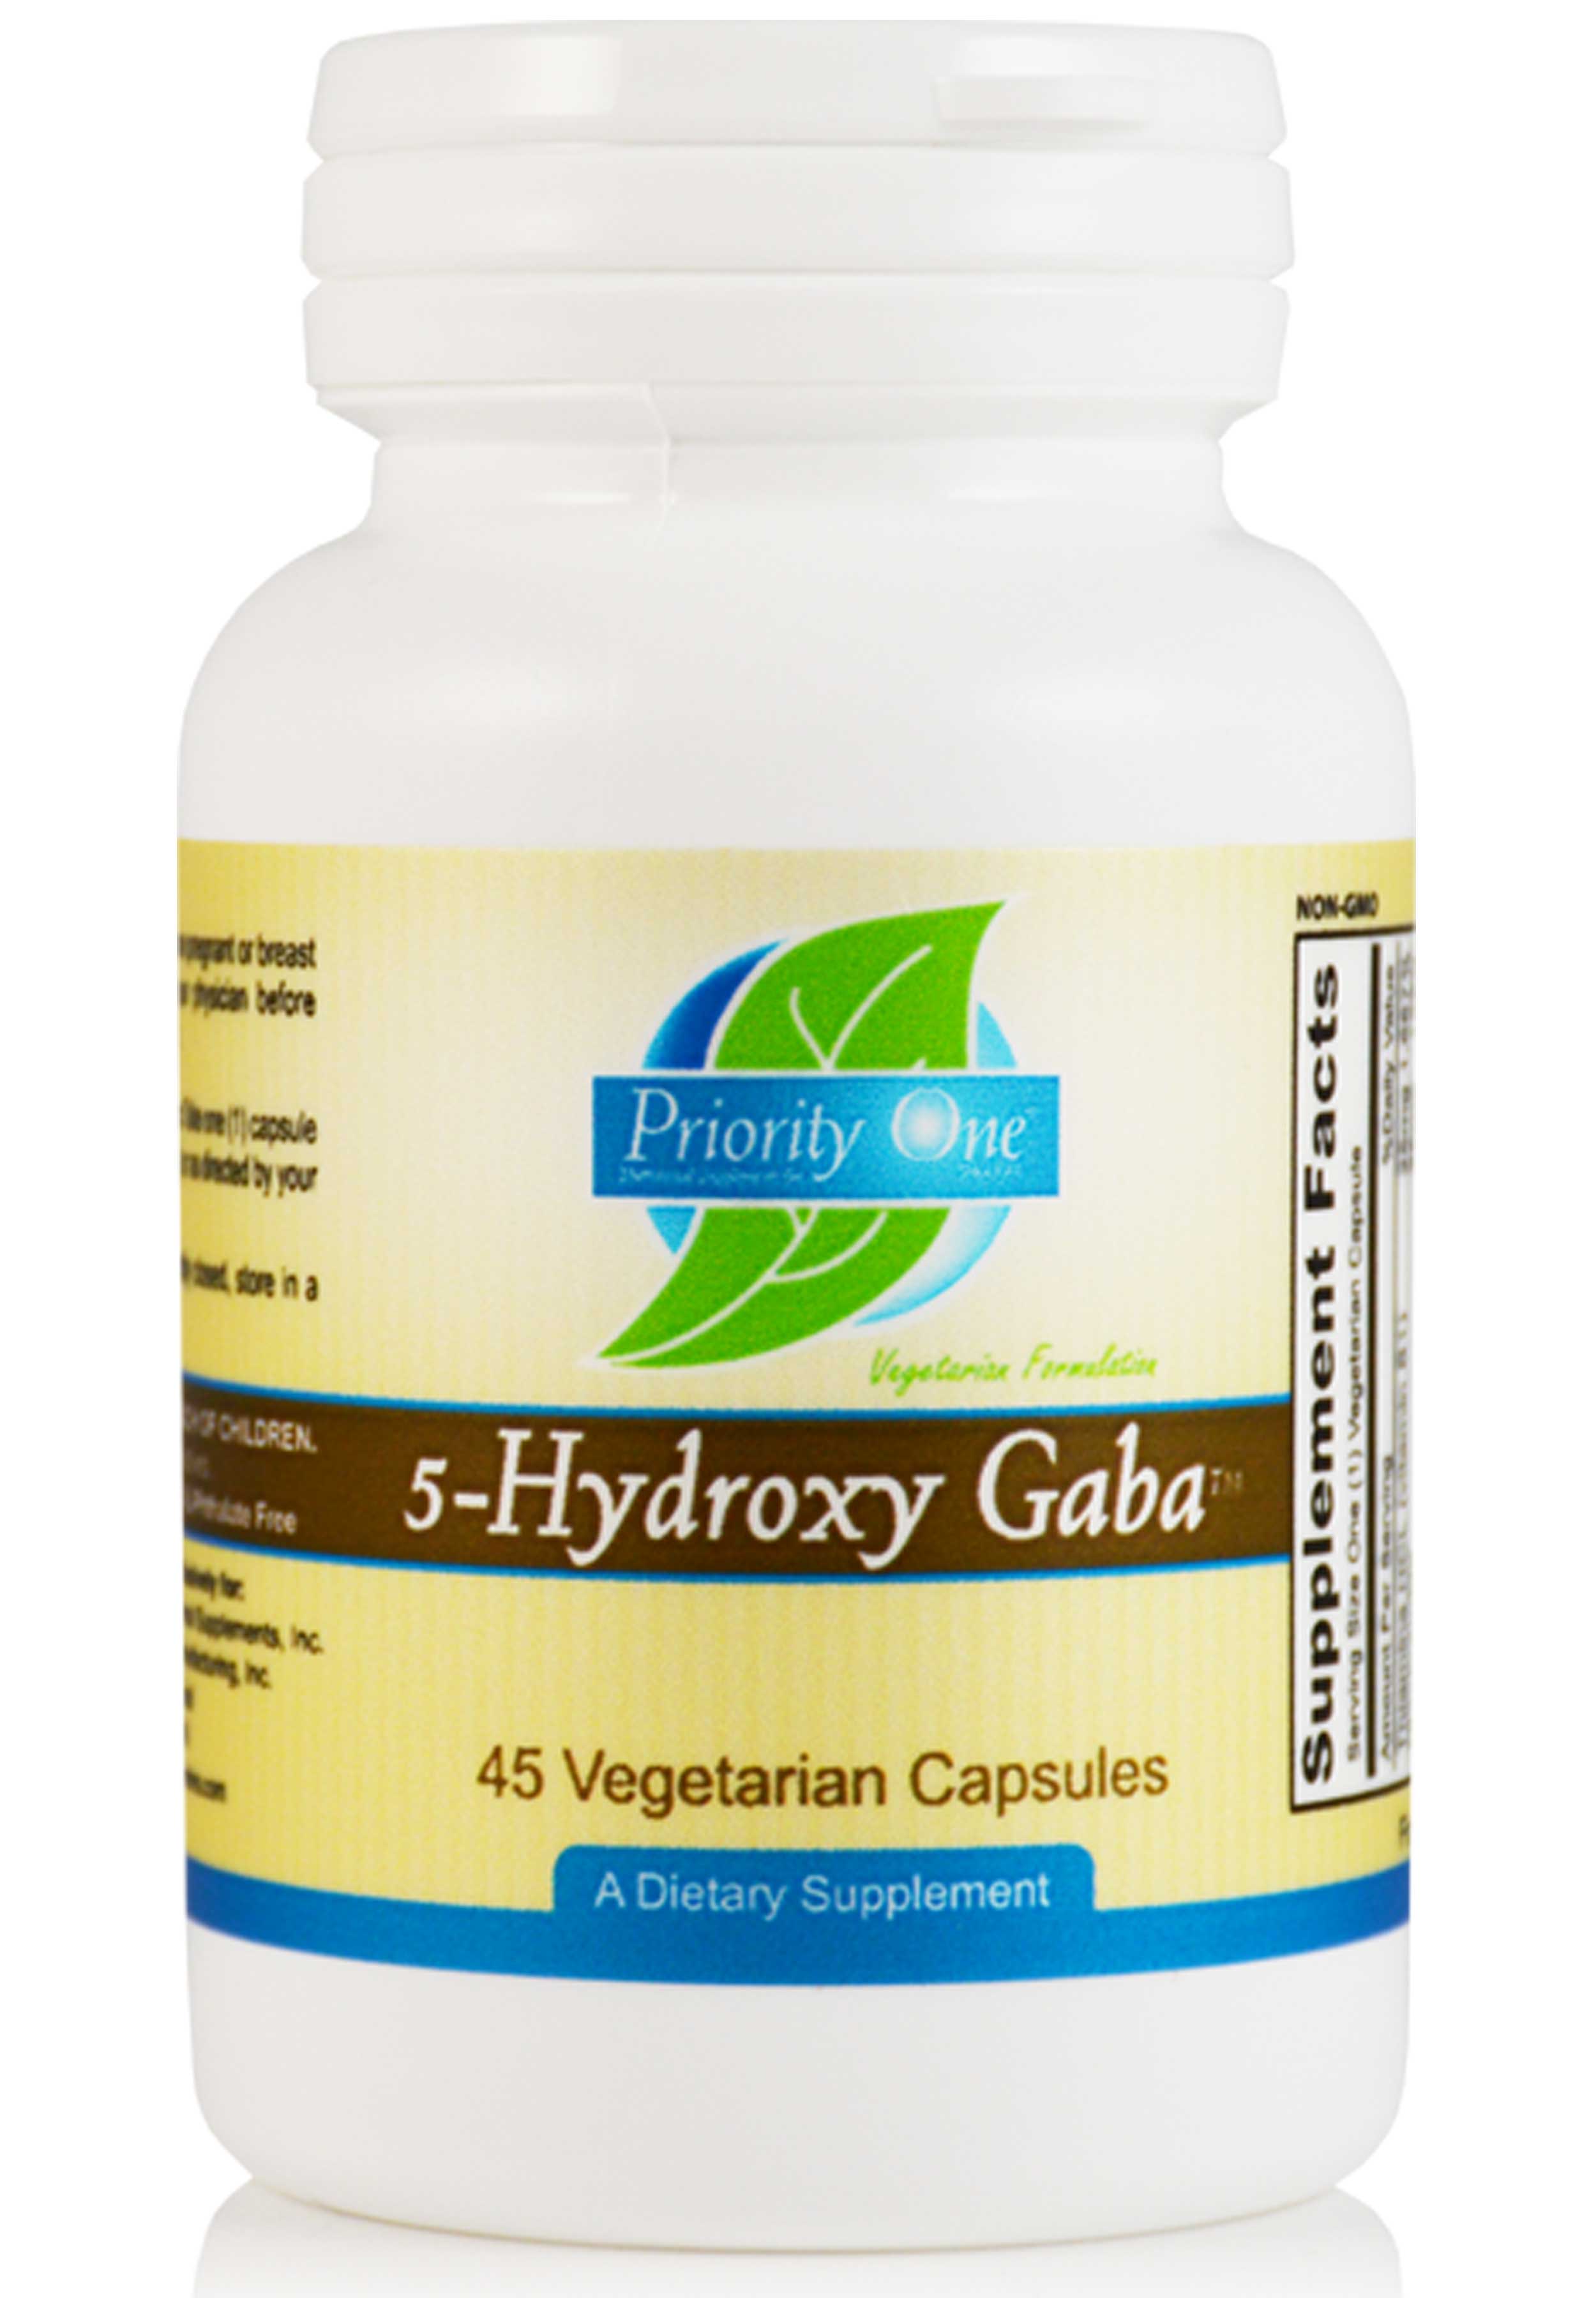 Priority One 5-Hydroxy Gaba